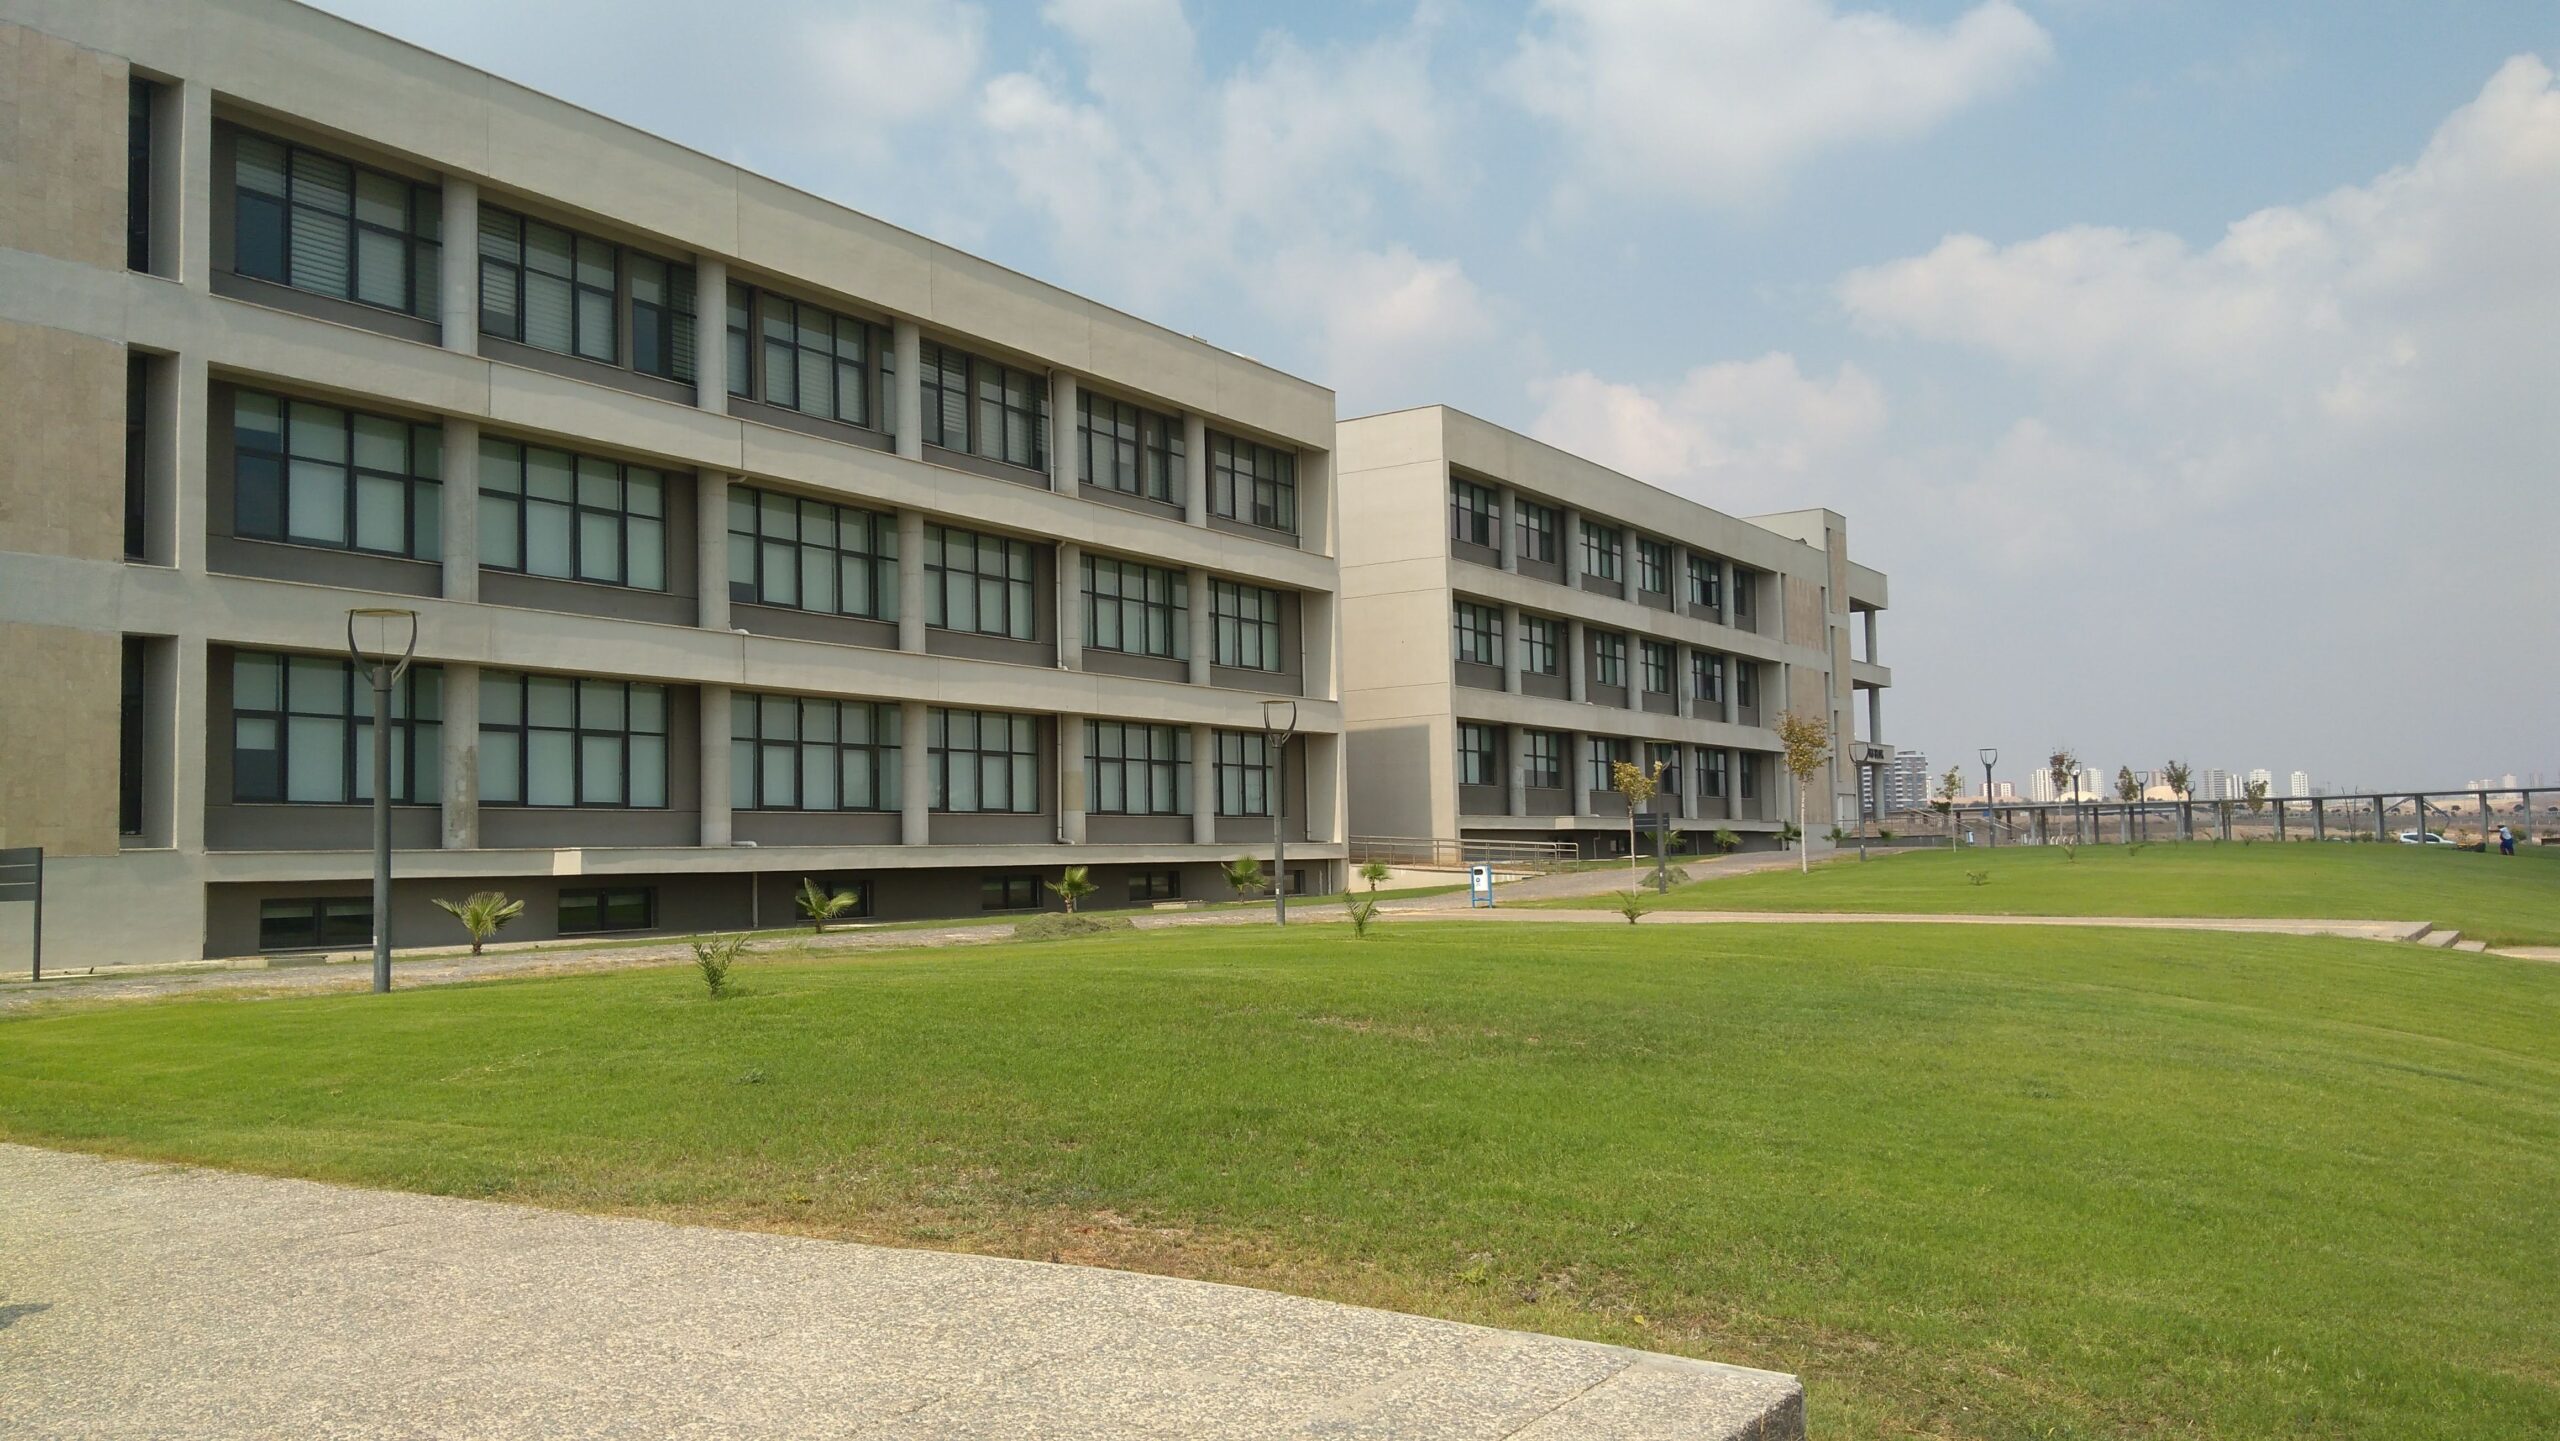 adana universitesi find and study 8 scaled - Adana Alparslan Türkeş Science and Technology University